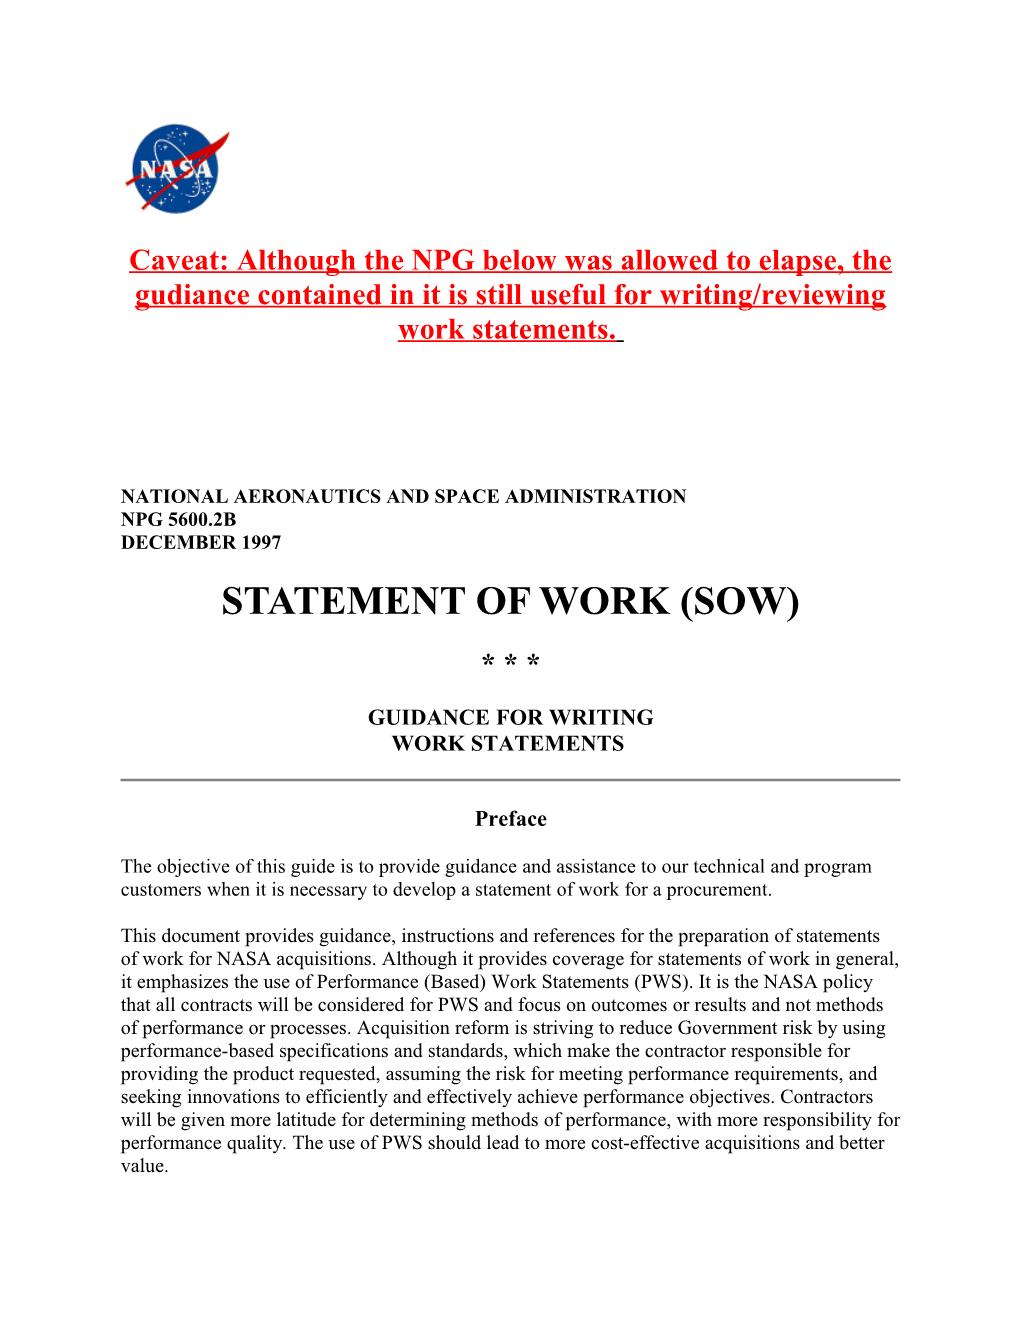 Statement of Work (Sow)